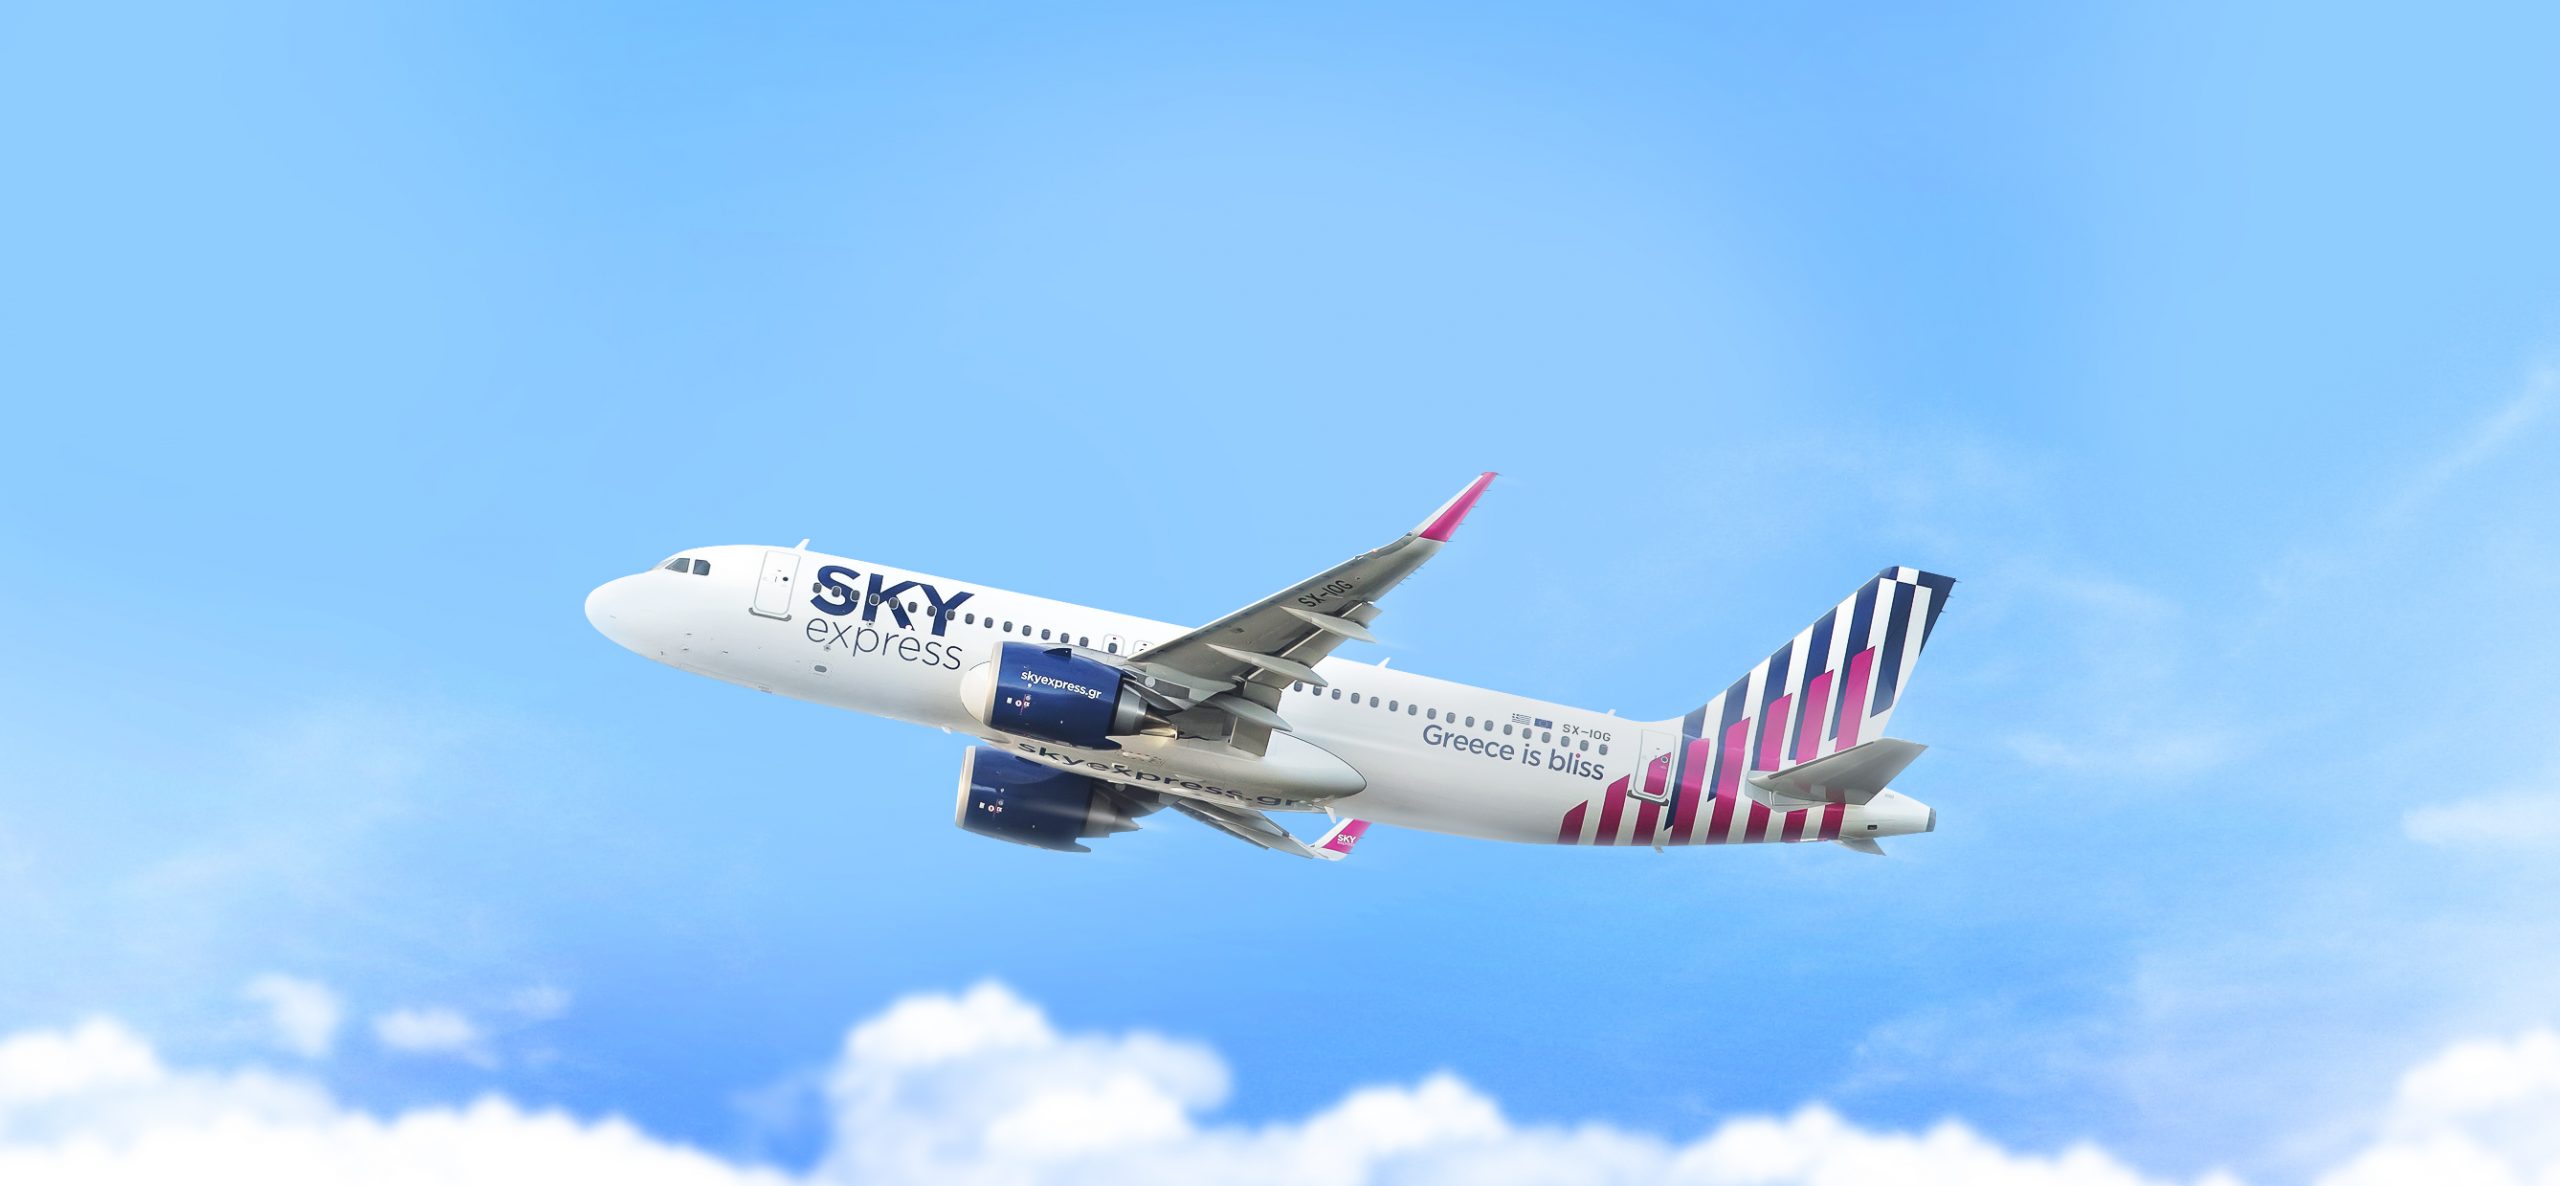 SKY express: Πτήσεις σε 20 πόλεις εξωτερικού και σε 34 ελληνικούς προορισμούς